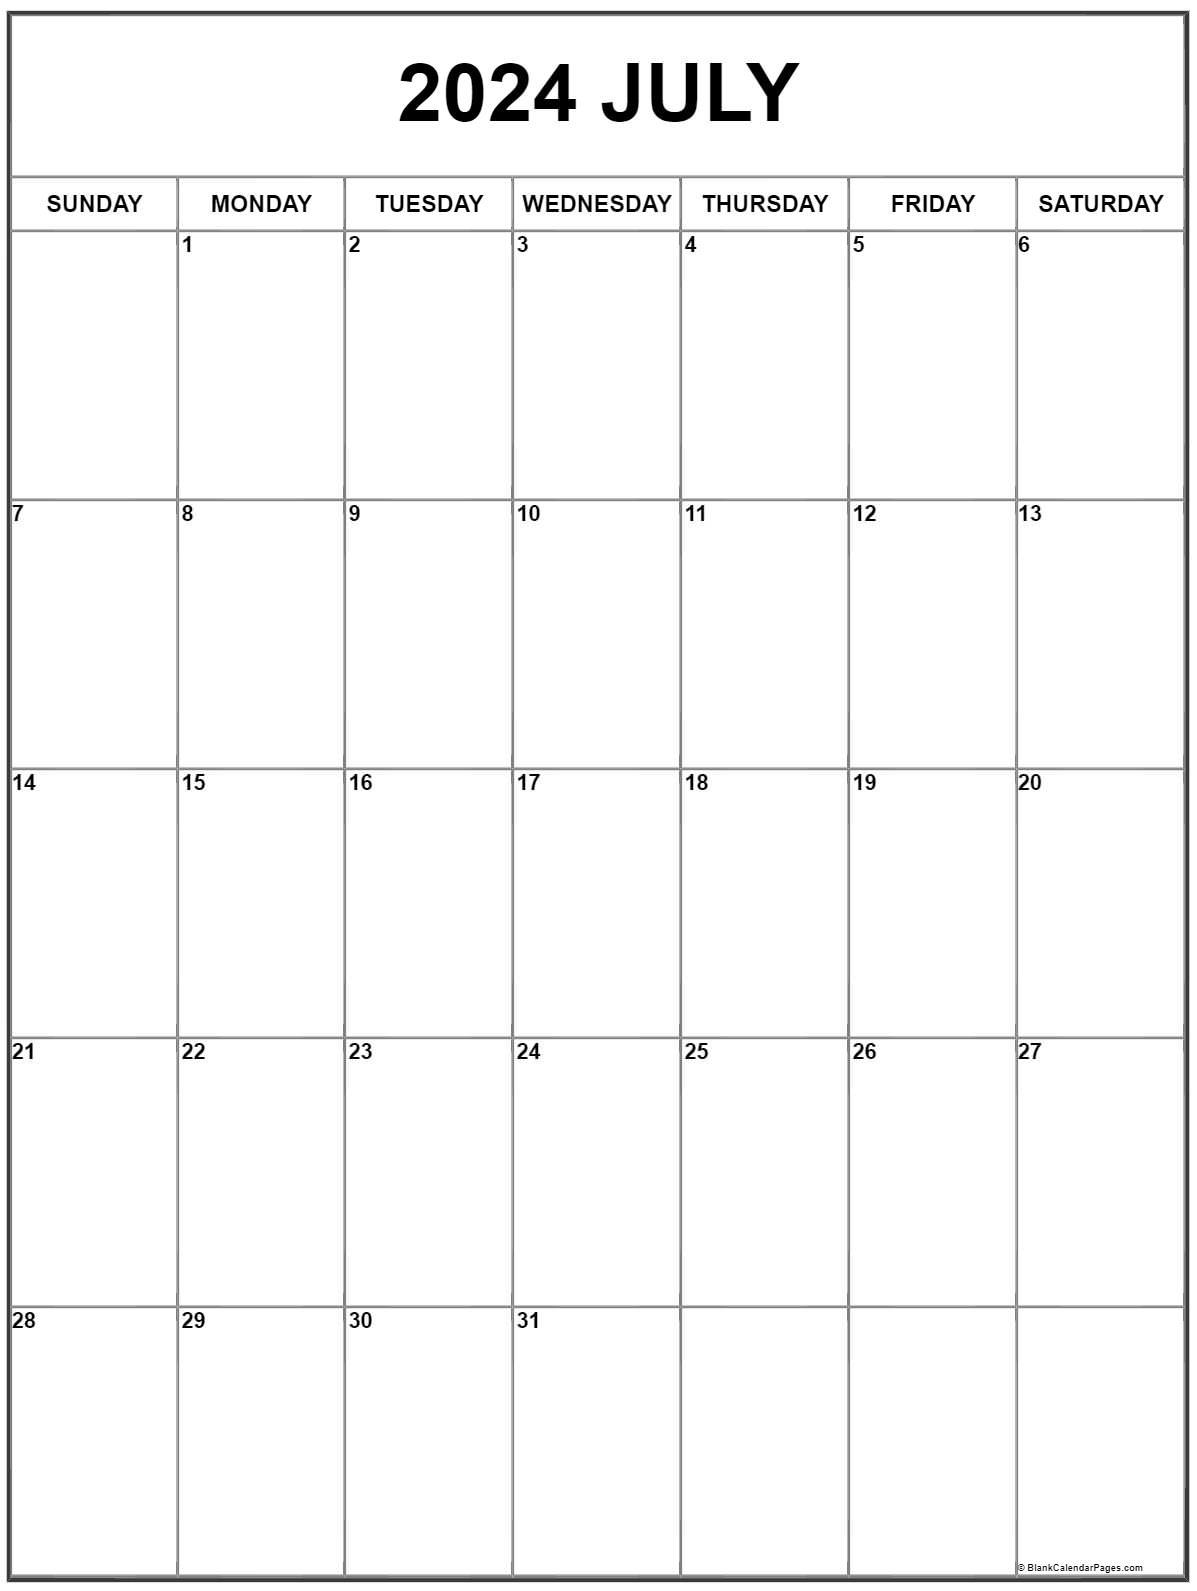 January 2023 Vertical Calendar Portrait 2023 January Calendars Handy 